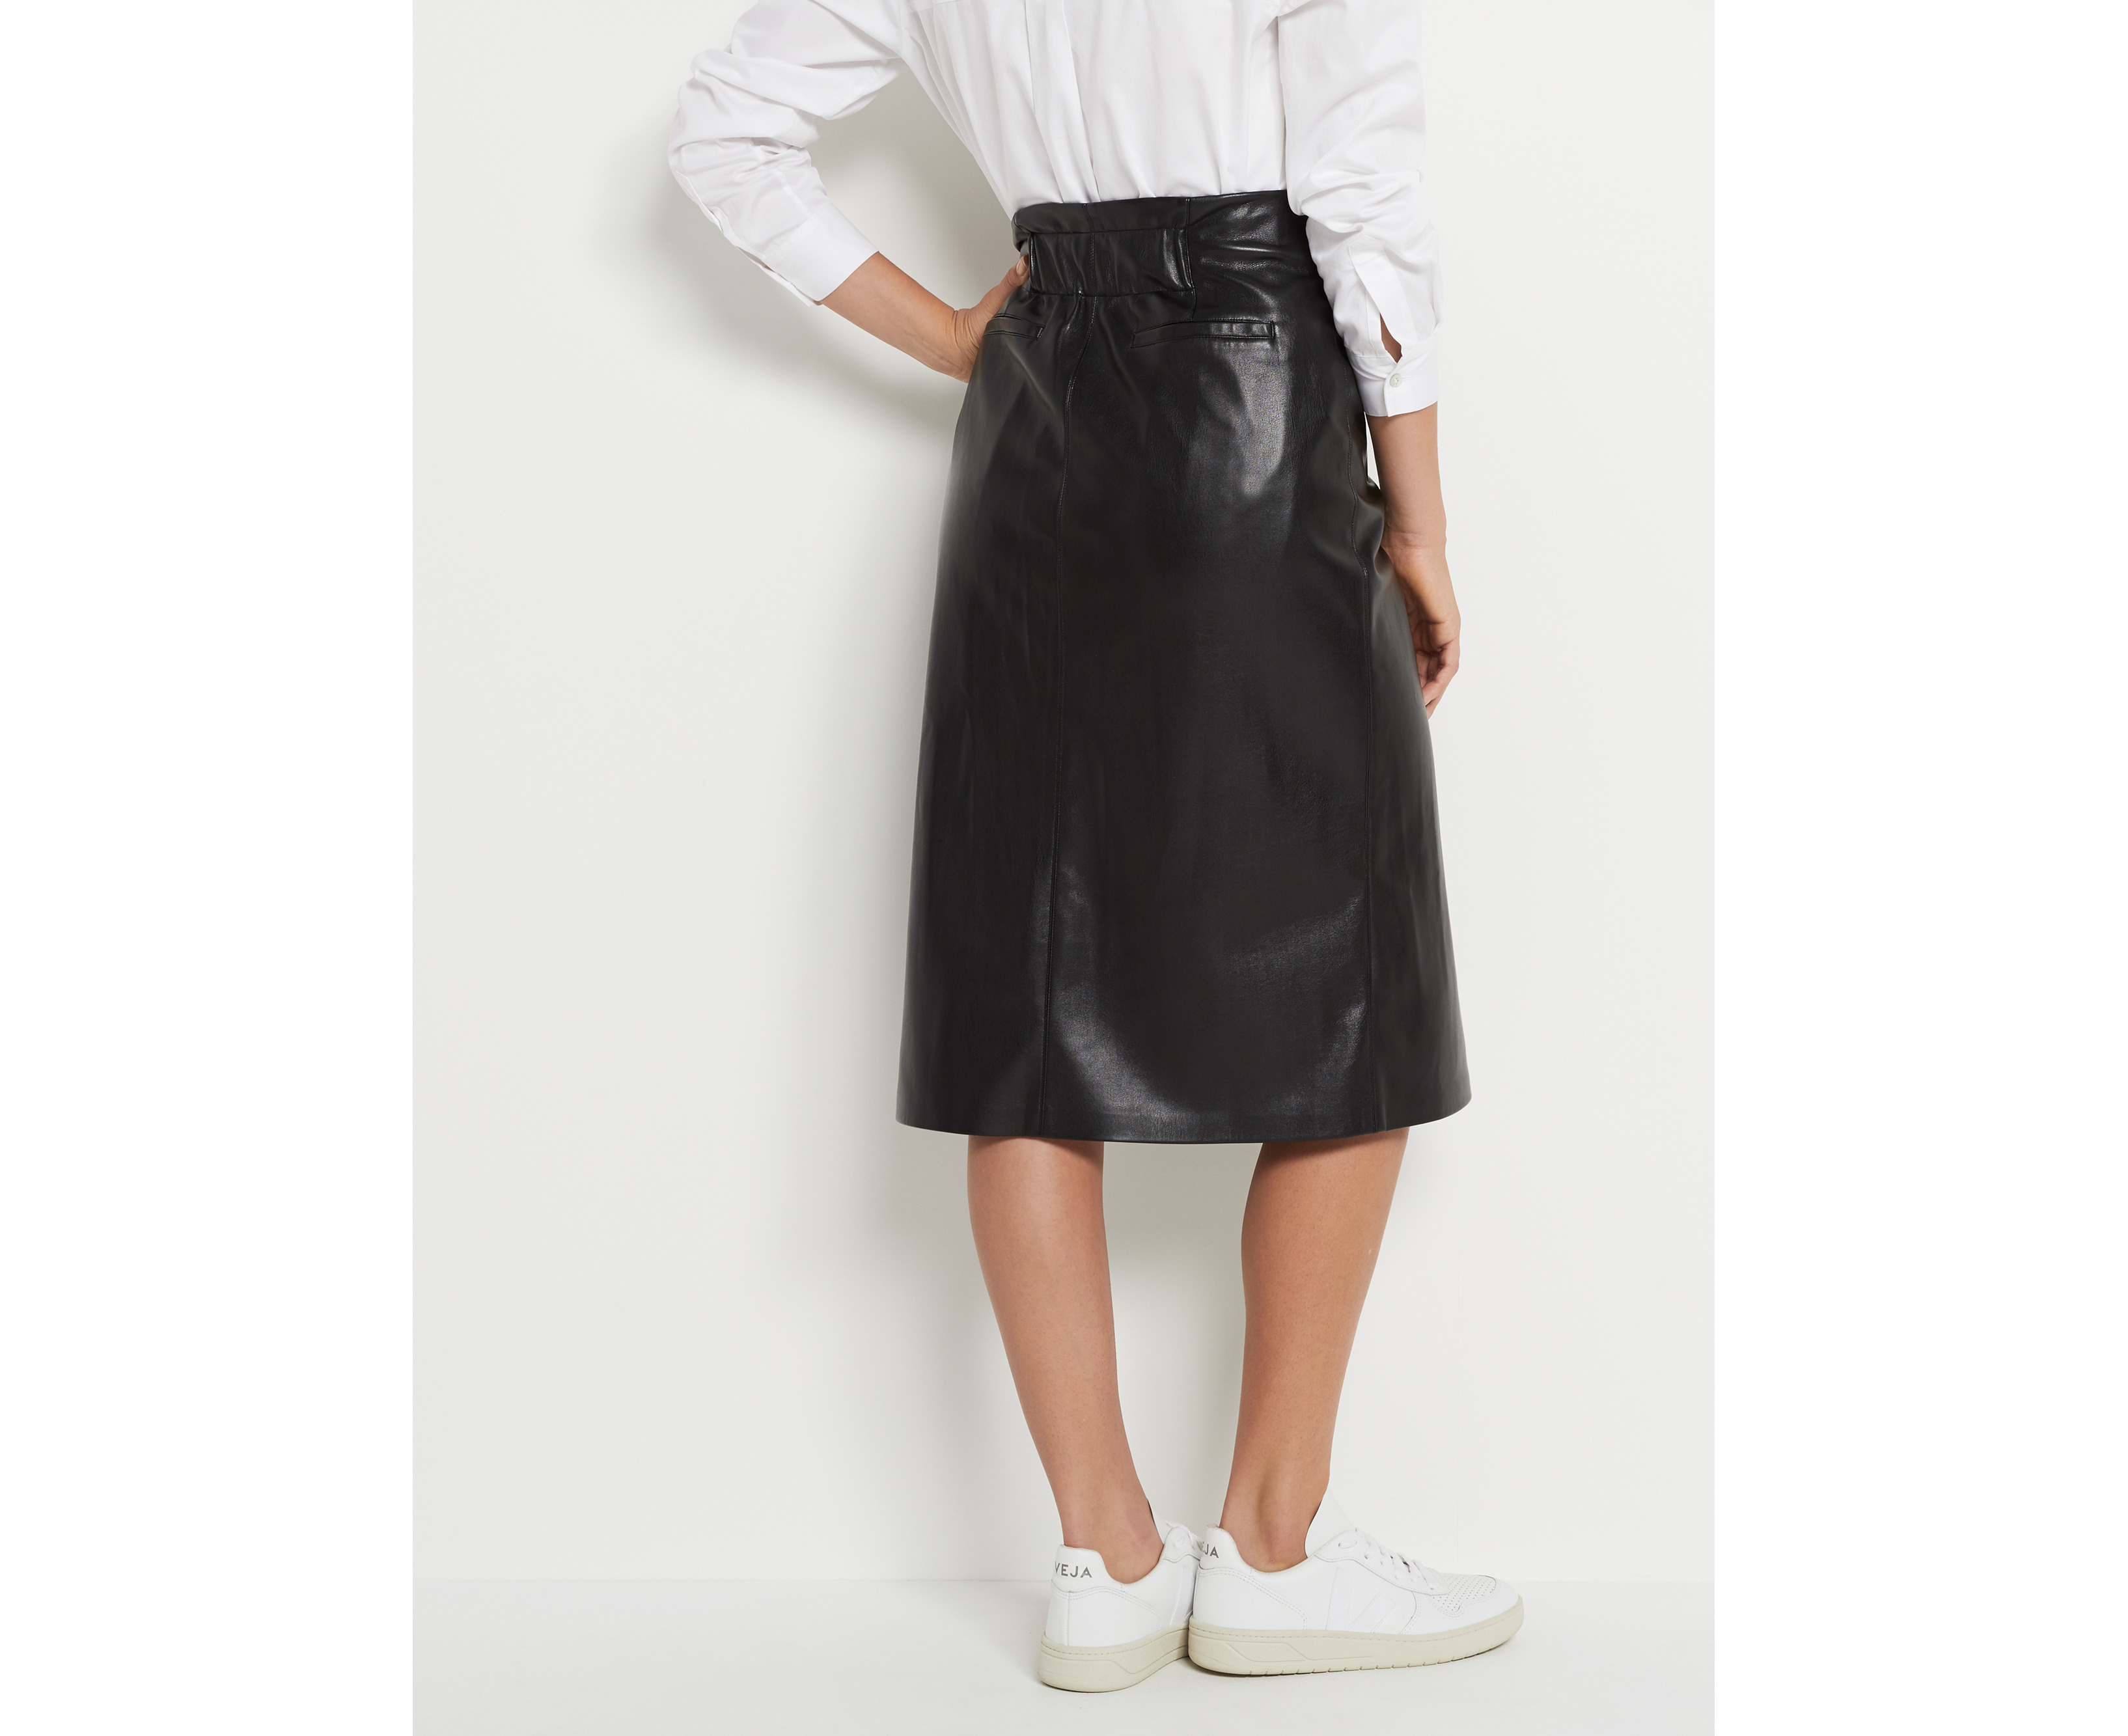 Sussan Women's Faux Leather Skirt in Black | Catch.com.au